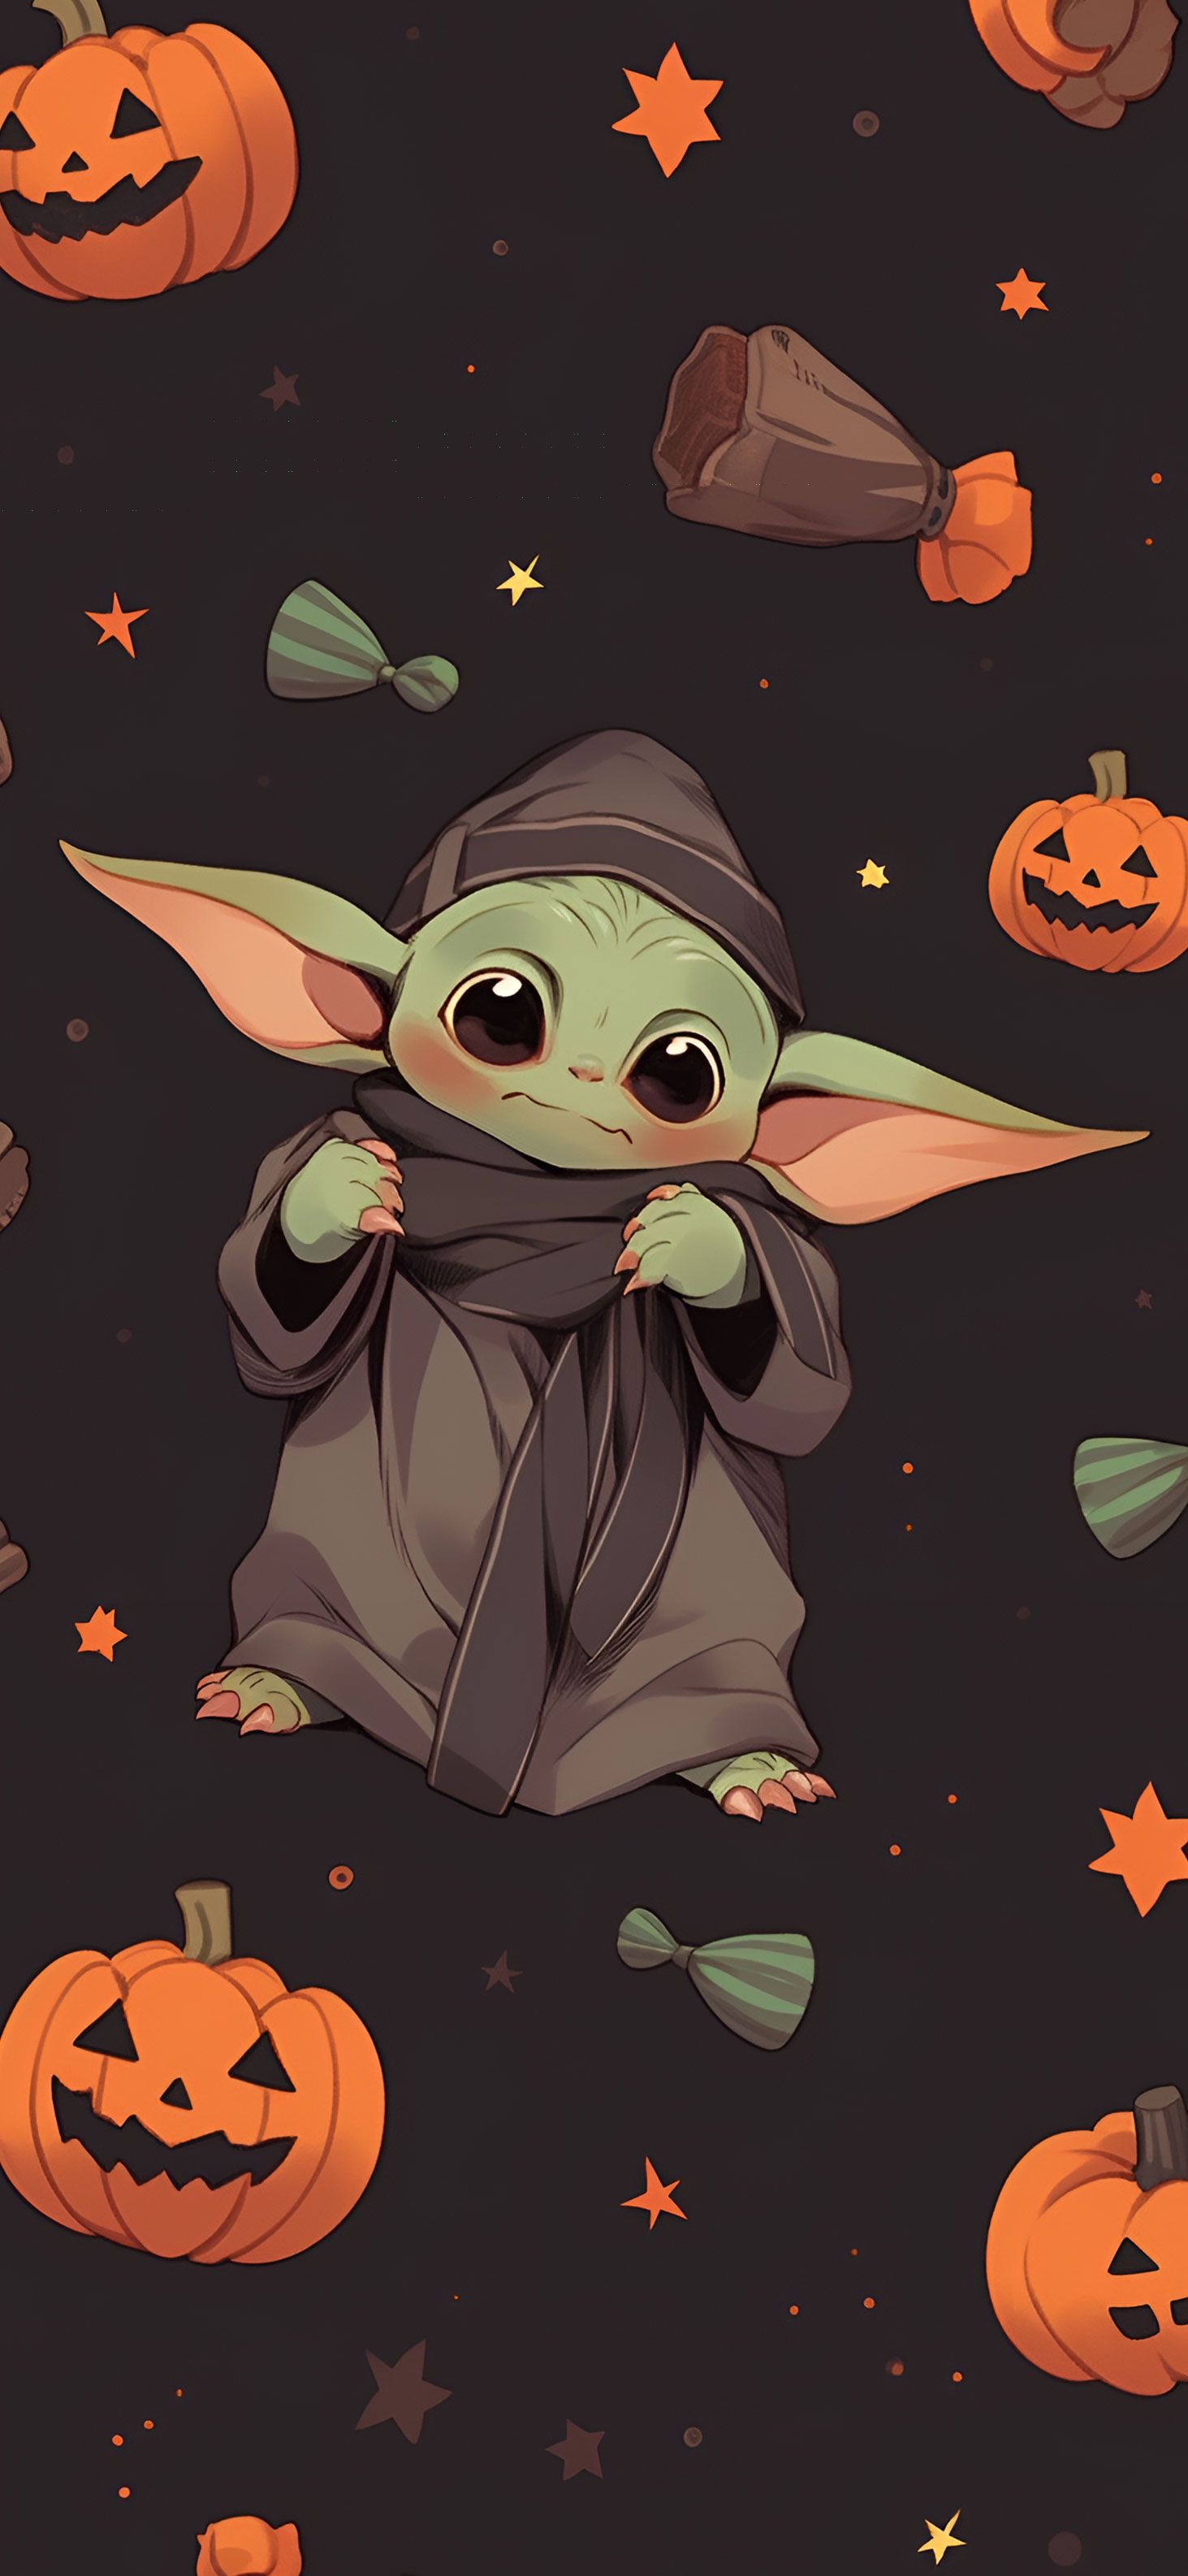 Halloween Baby Yoda & Pumpkins Pattern Wallpaper for iPhone